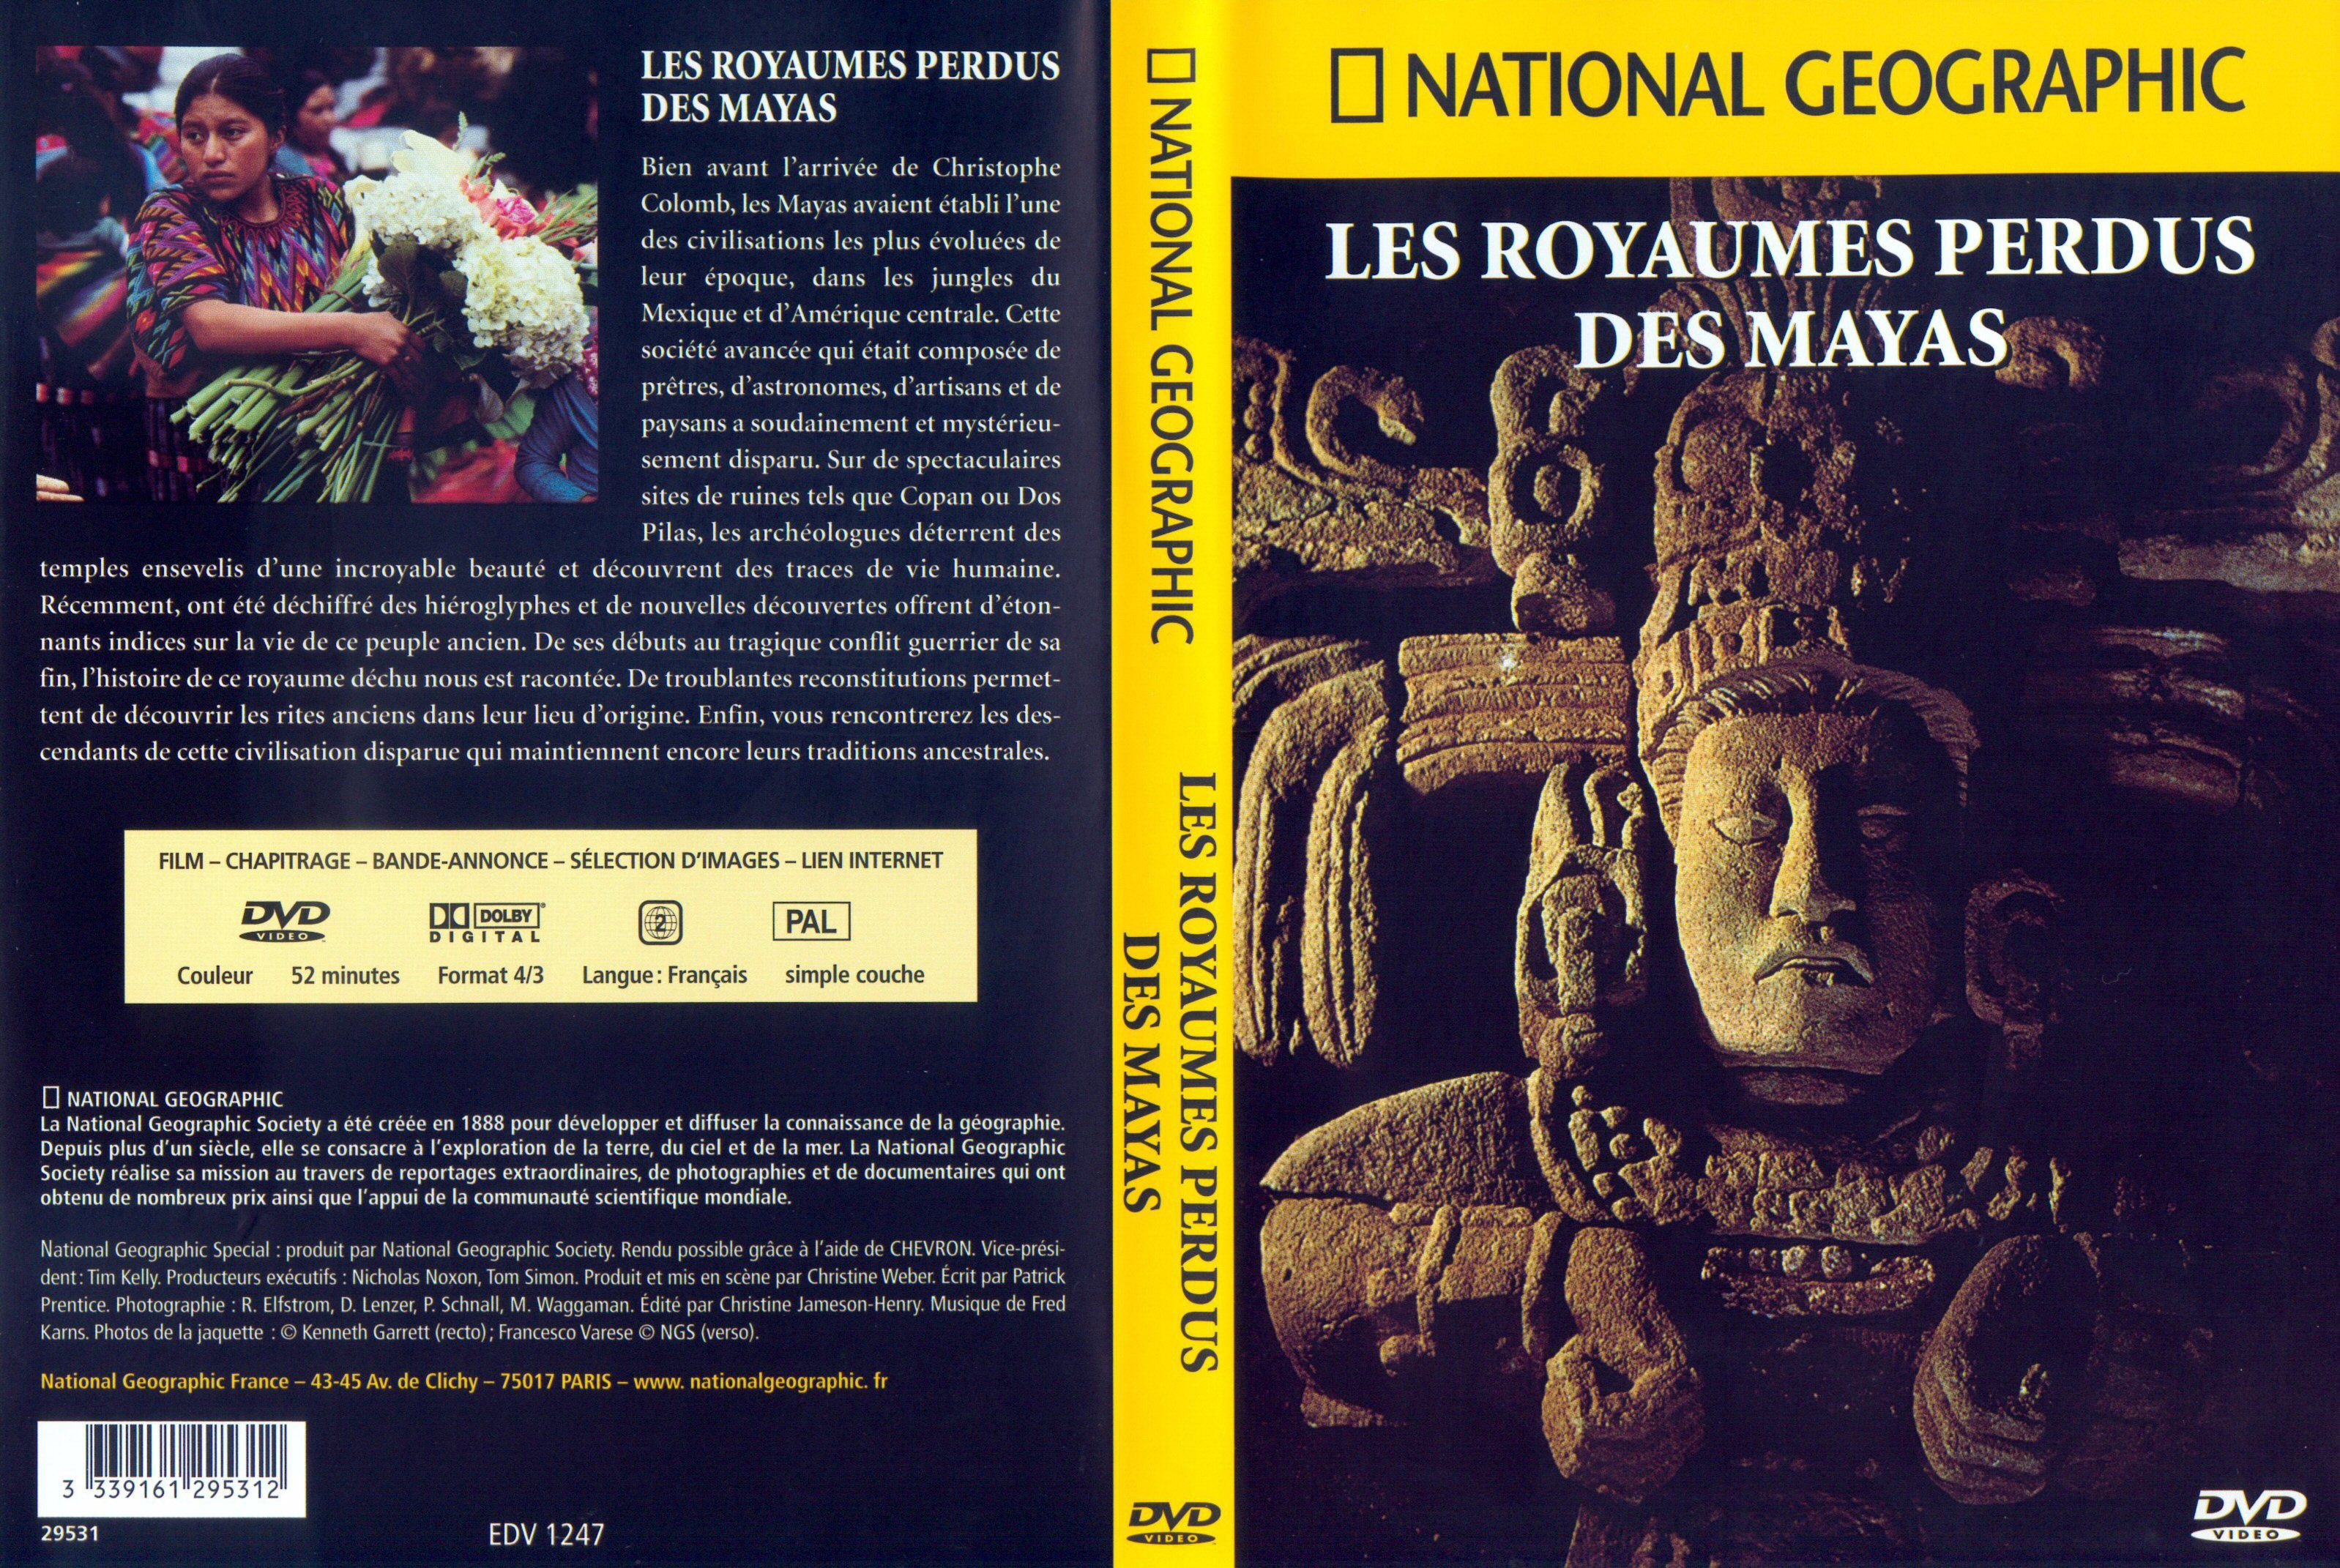 Jaquette DVD National Geographic - Les royaumes perdus des Mayas